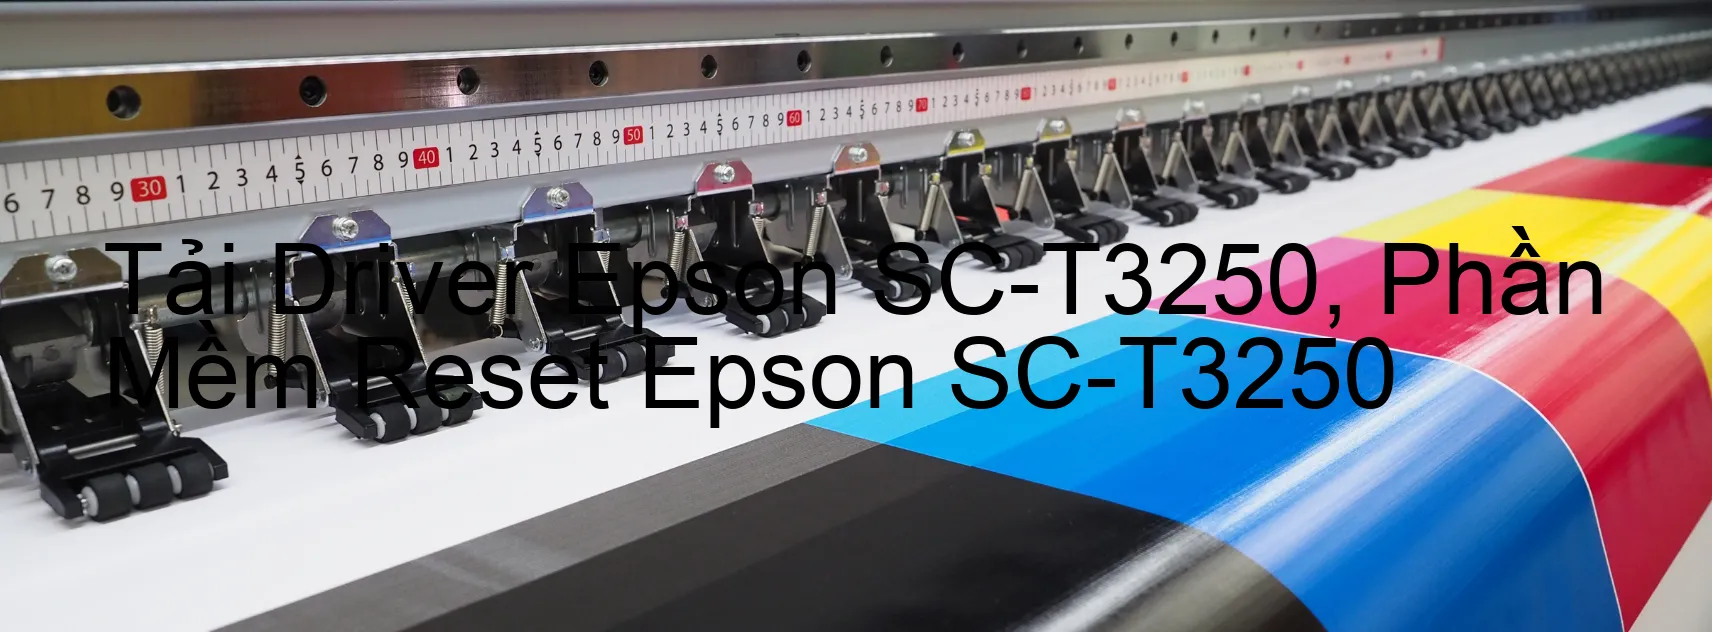 Driver Epson SC-T3250, Phần Mềm Reset Epson SC-T3250